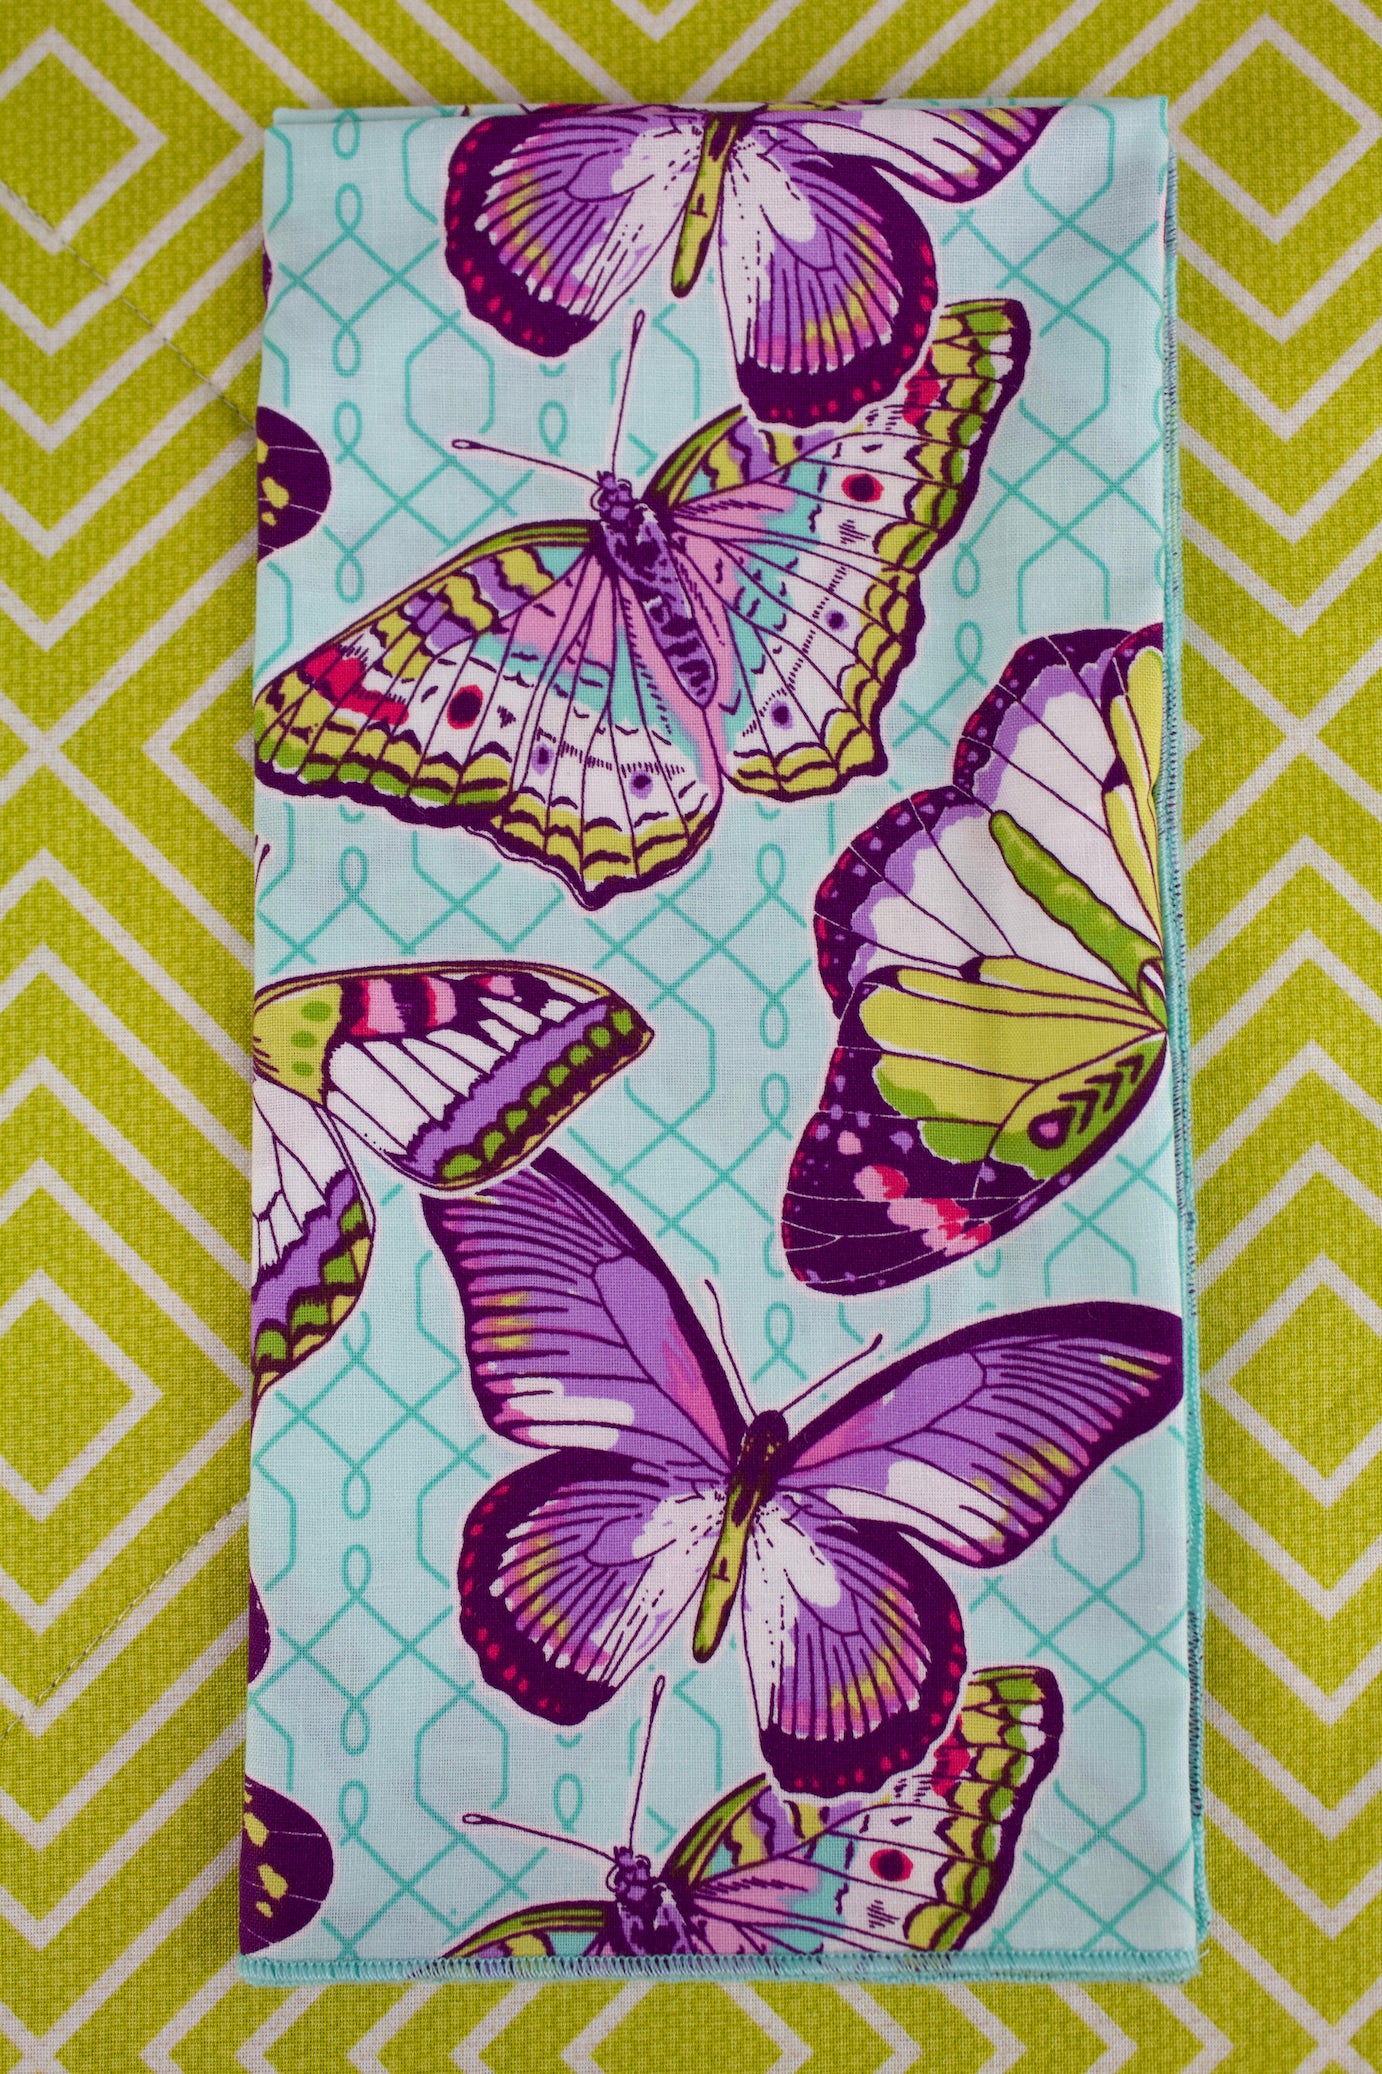 Butterfly Flutter Napkins - (Set of 4)-The Blue Peony-Animal_Butterfly,Category_Napkins,Category_Table Linens,Color_Aqua,Color_Lime Green,Color_Purple,Department_Kitchen,Material_Cotton,Theme_Animal,Theme_Spring